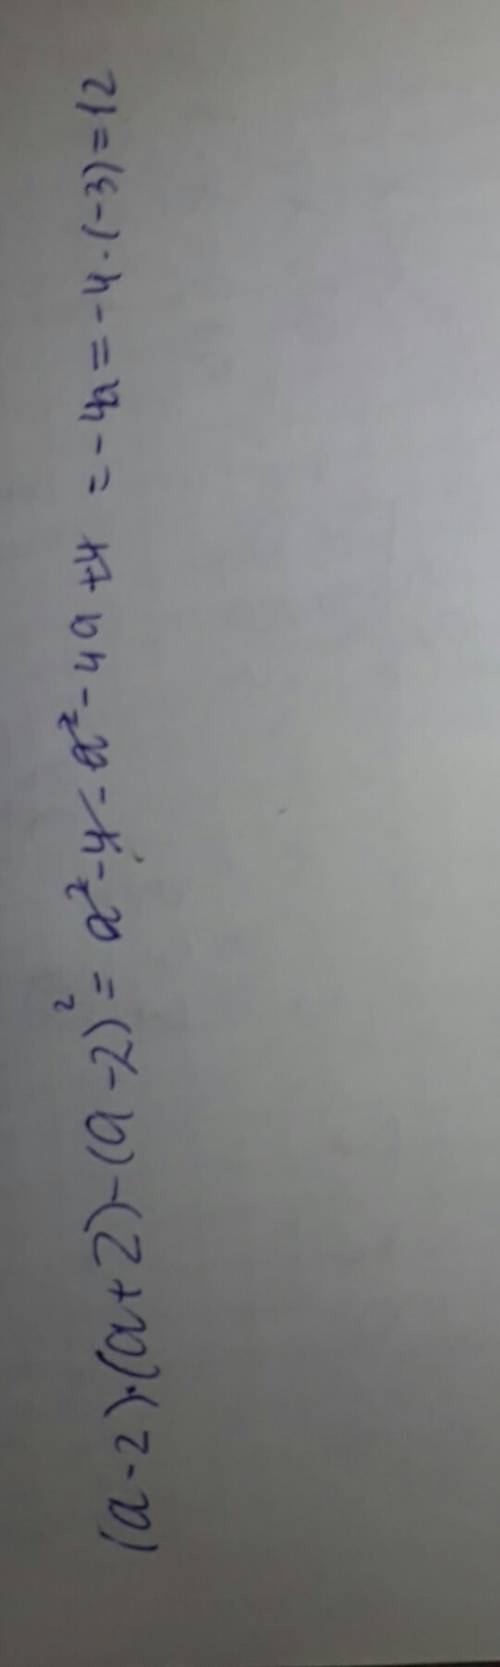 Выражение (a-2)(a+-2) в квадрате и найдите его значение при a=-3